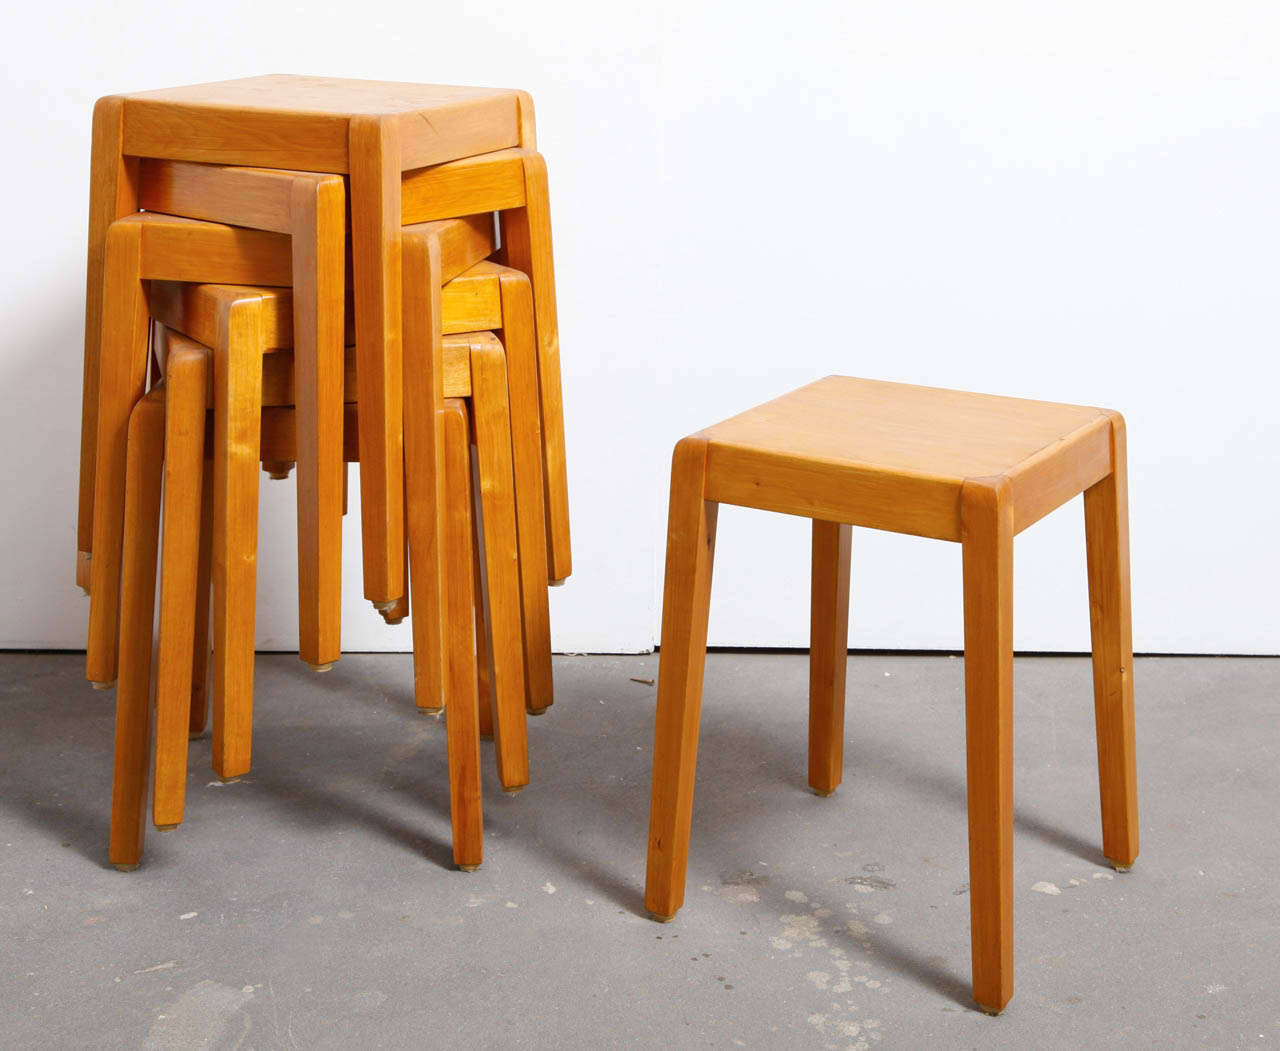 Sven Markelius

Set of 7 stools